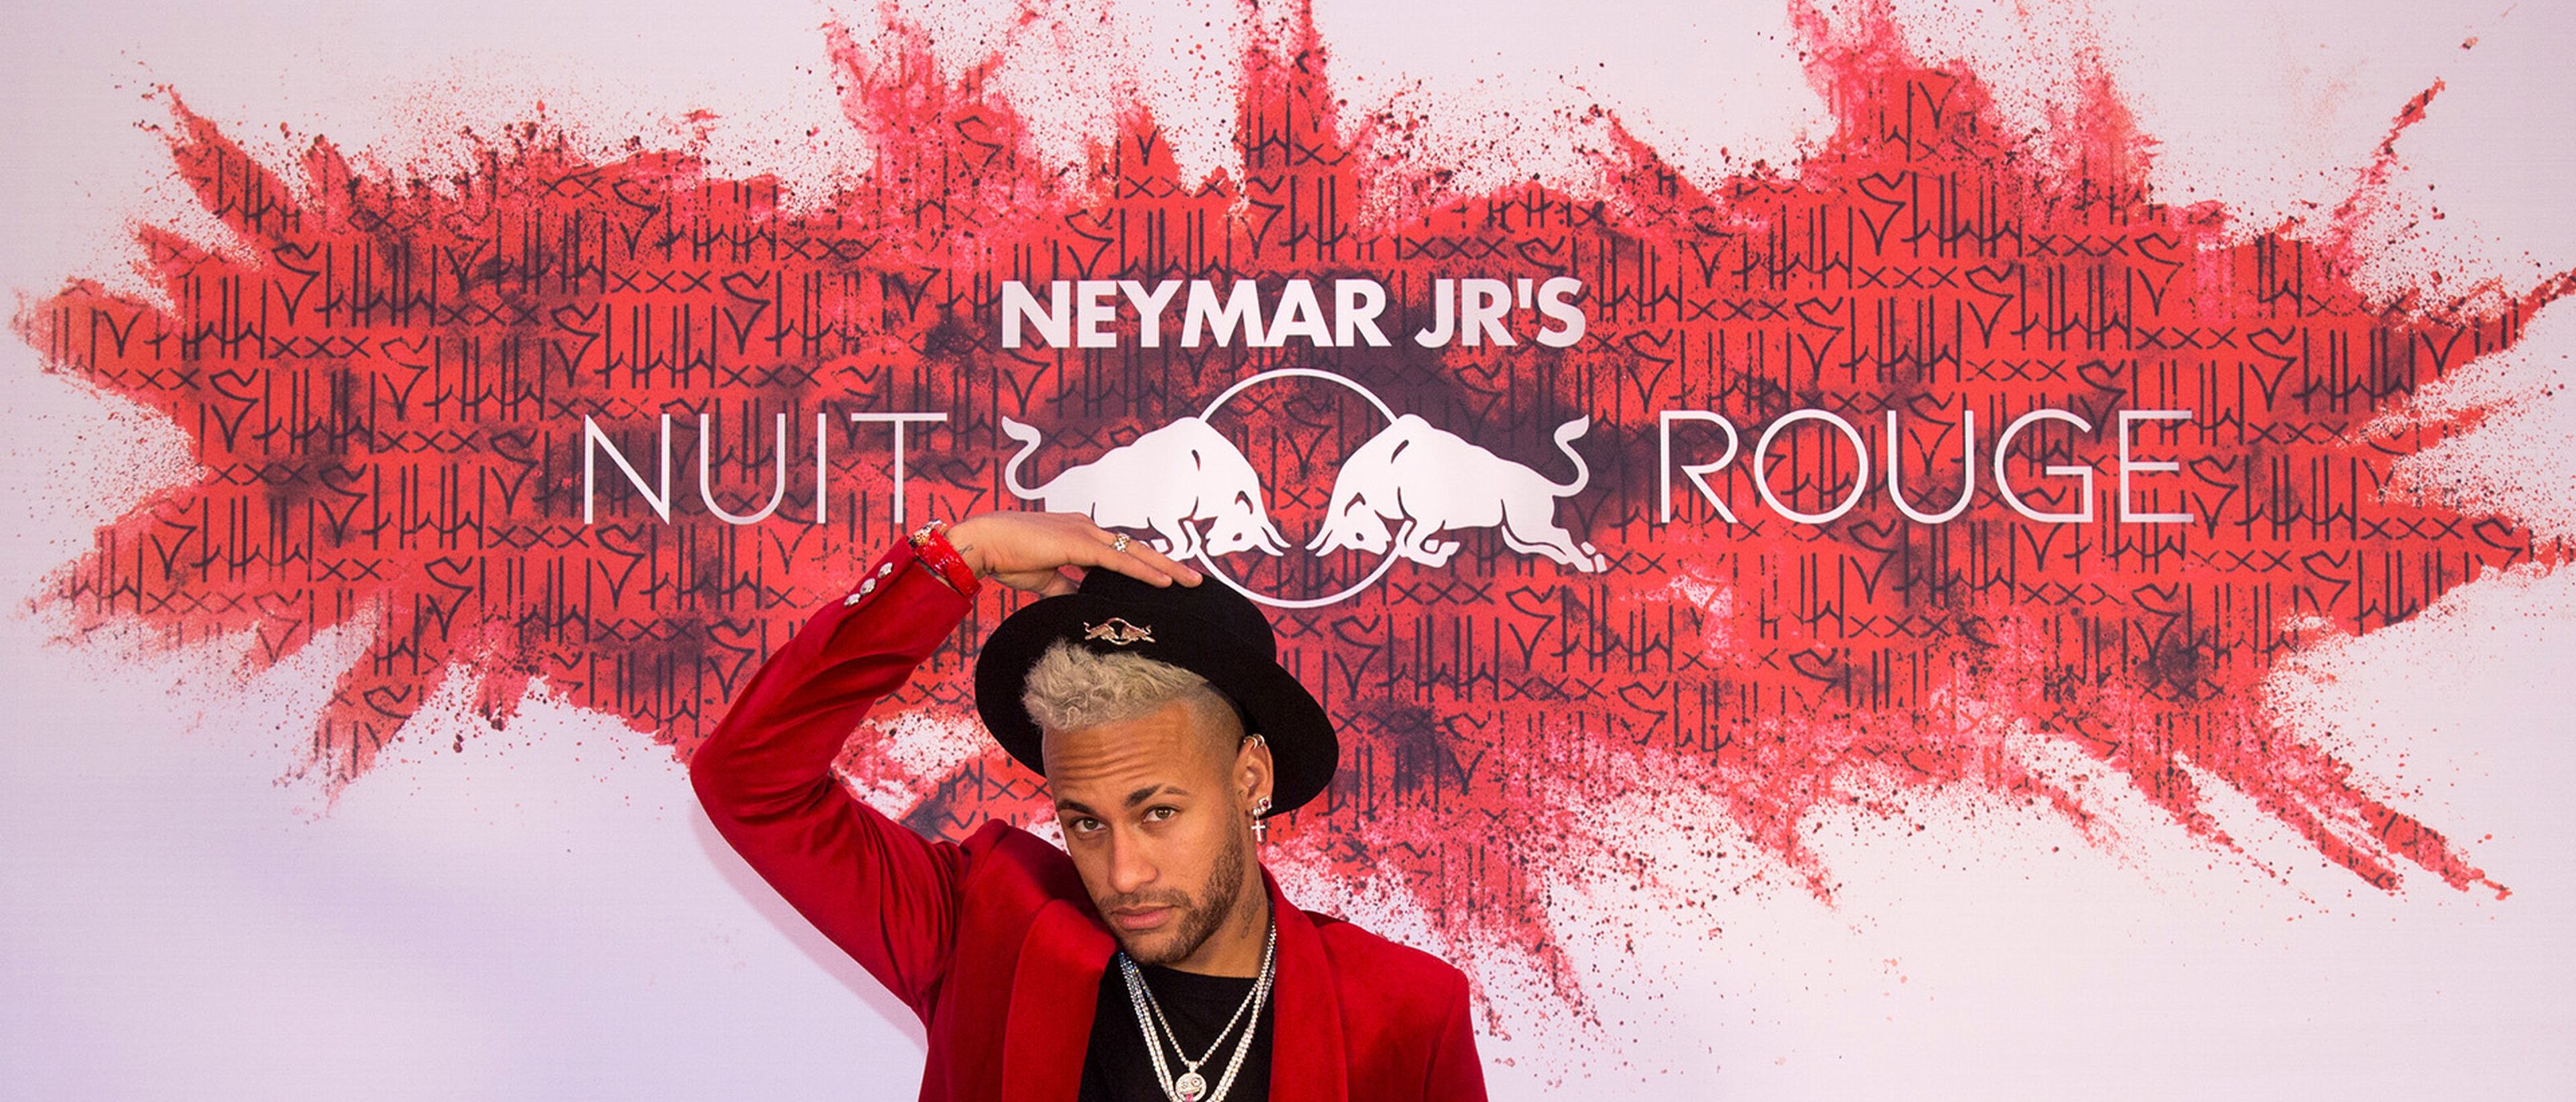 Starfußballer Neymar Jr.'s Geburtstag 2019